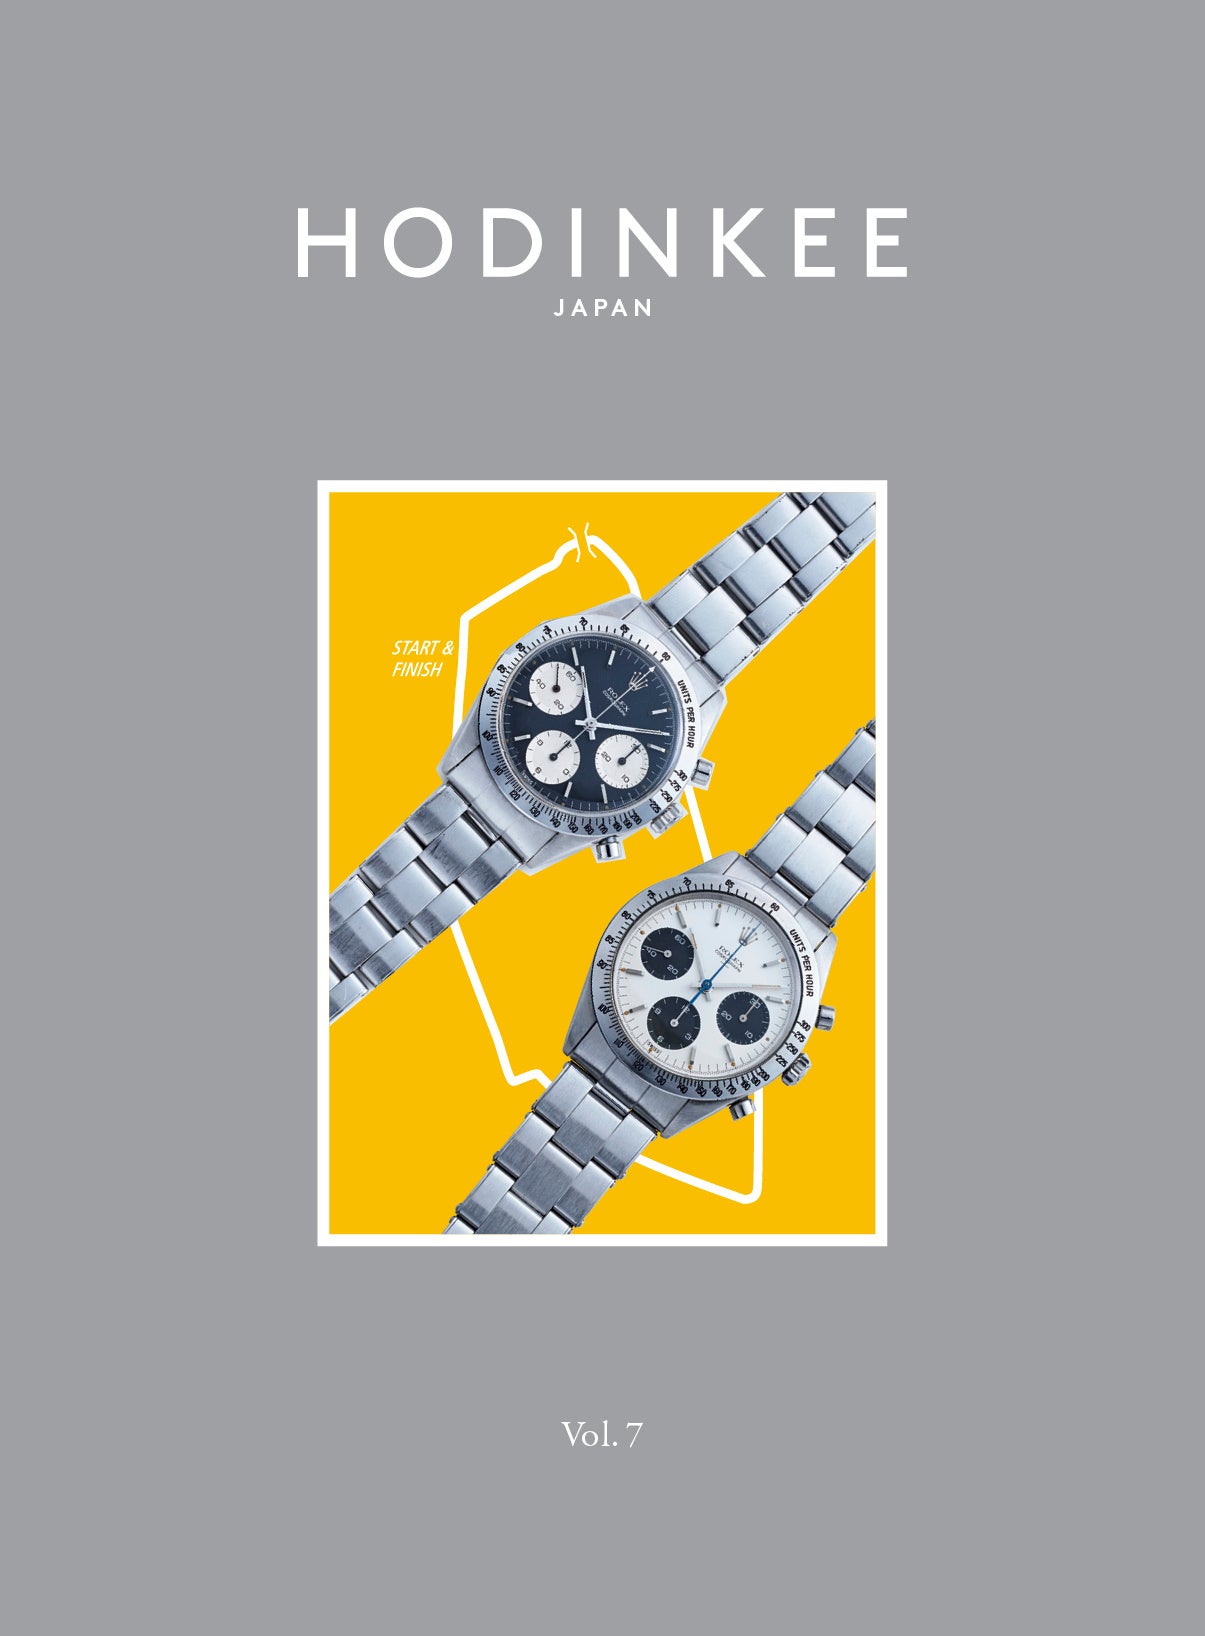 wHODINKEE Magazine Japan Edition, Volume 7x125i΁jɔIuCJvʔŔCxgJ